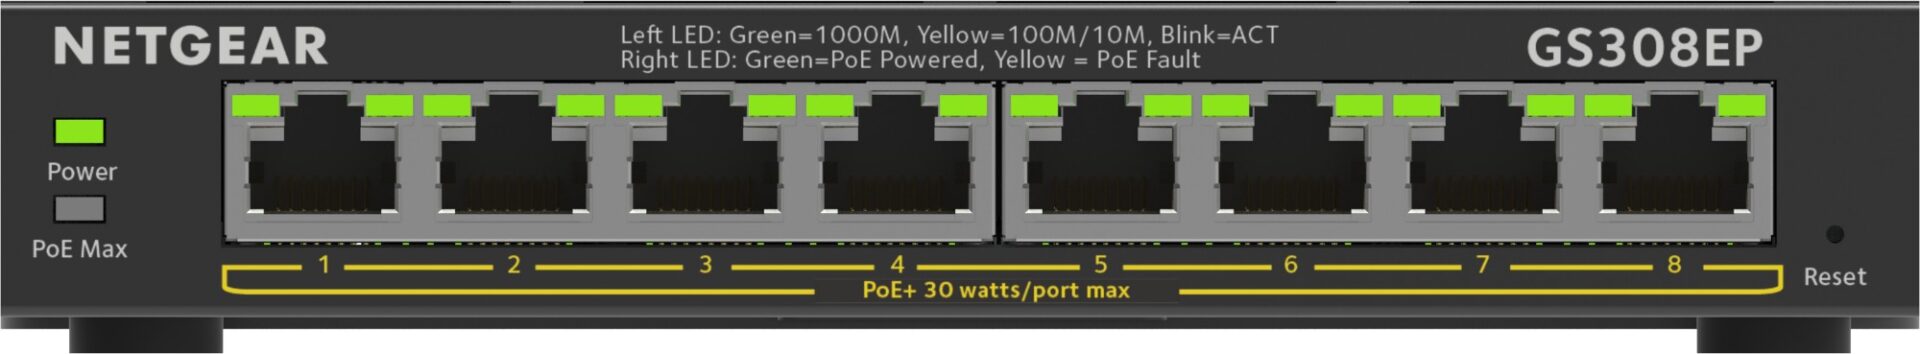 NETGEAR 8-Port Gigabit Ethernet PoE+ Plus Switch (GS308EP) Managed L2/L3 Gigabit Ethernet